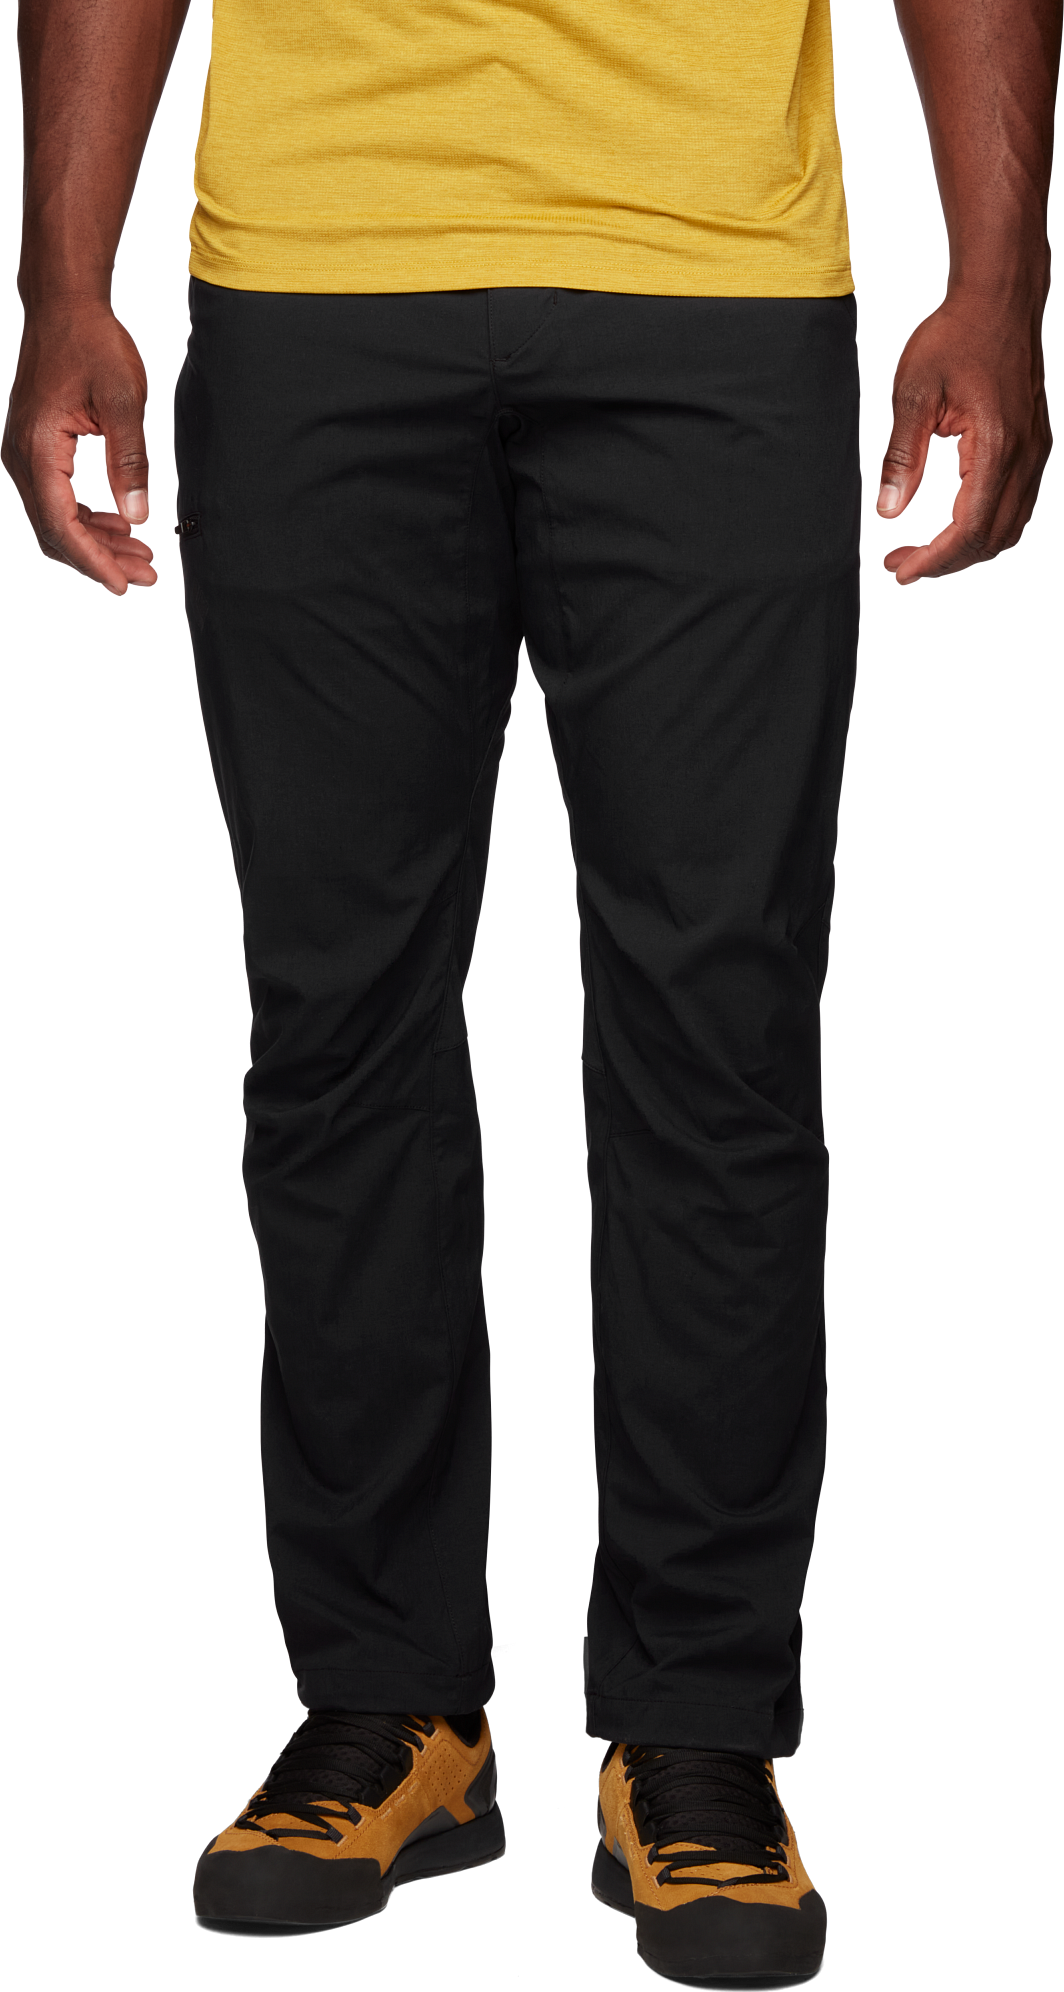 Black Diamond Men’s Technician Alpine Pants Black